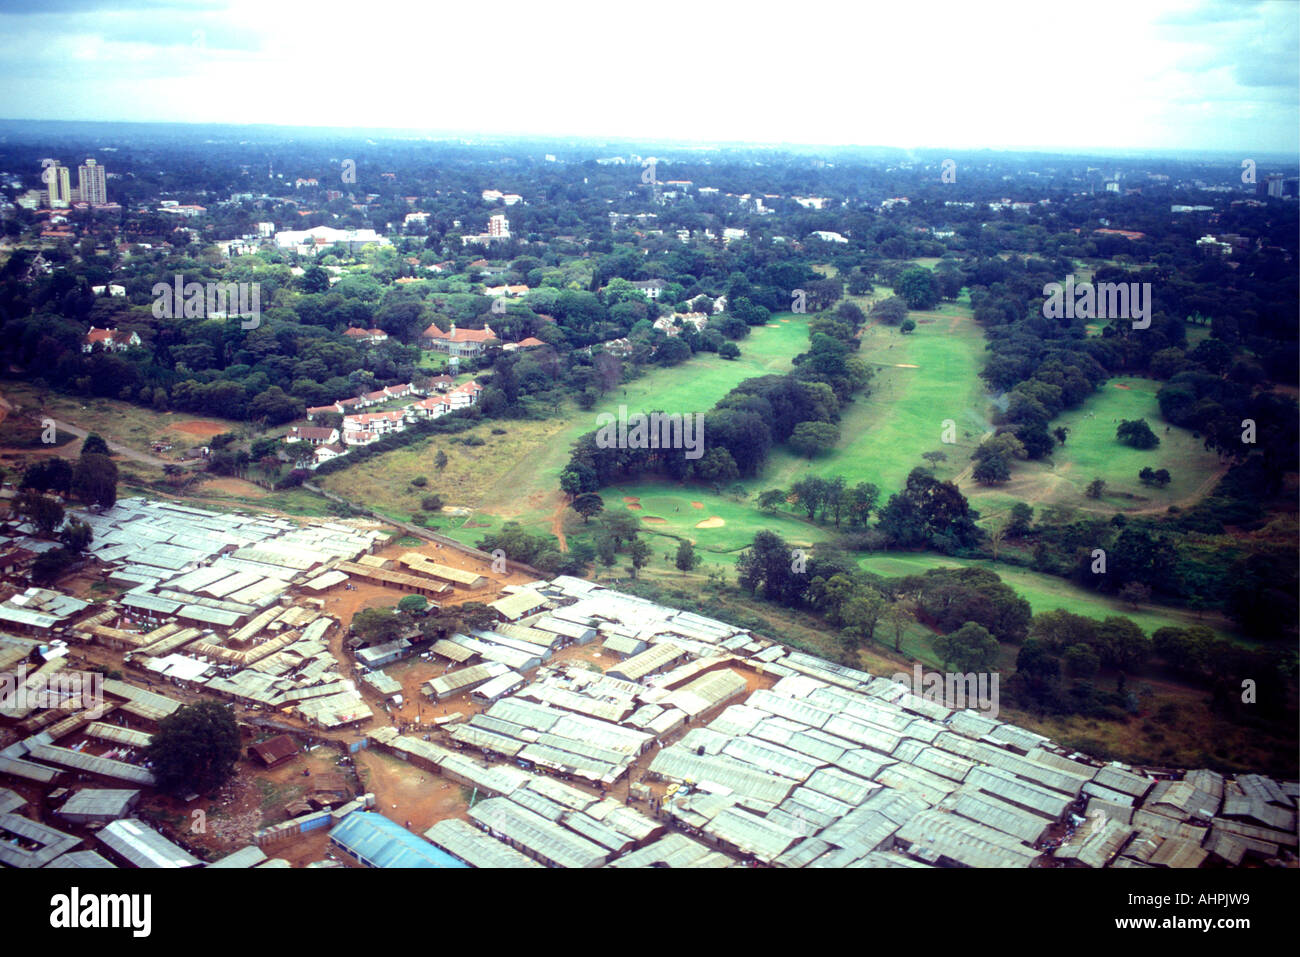 Vue aérienne de Kibera et le Royal Club de golf adjacent Nairobi Nairobi Kenya Afrique de l'Est Banque D'Images